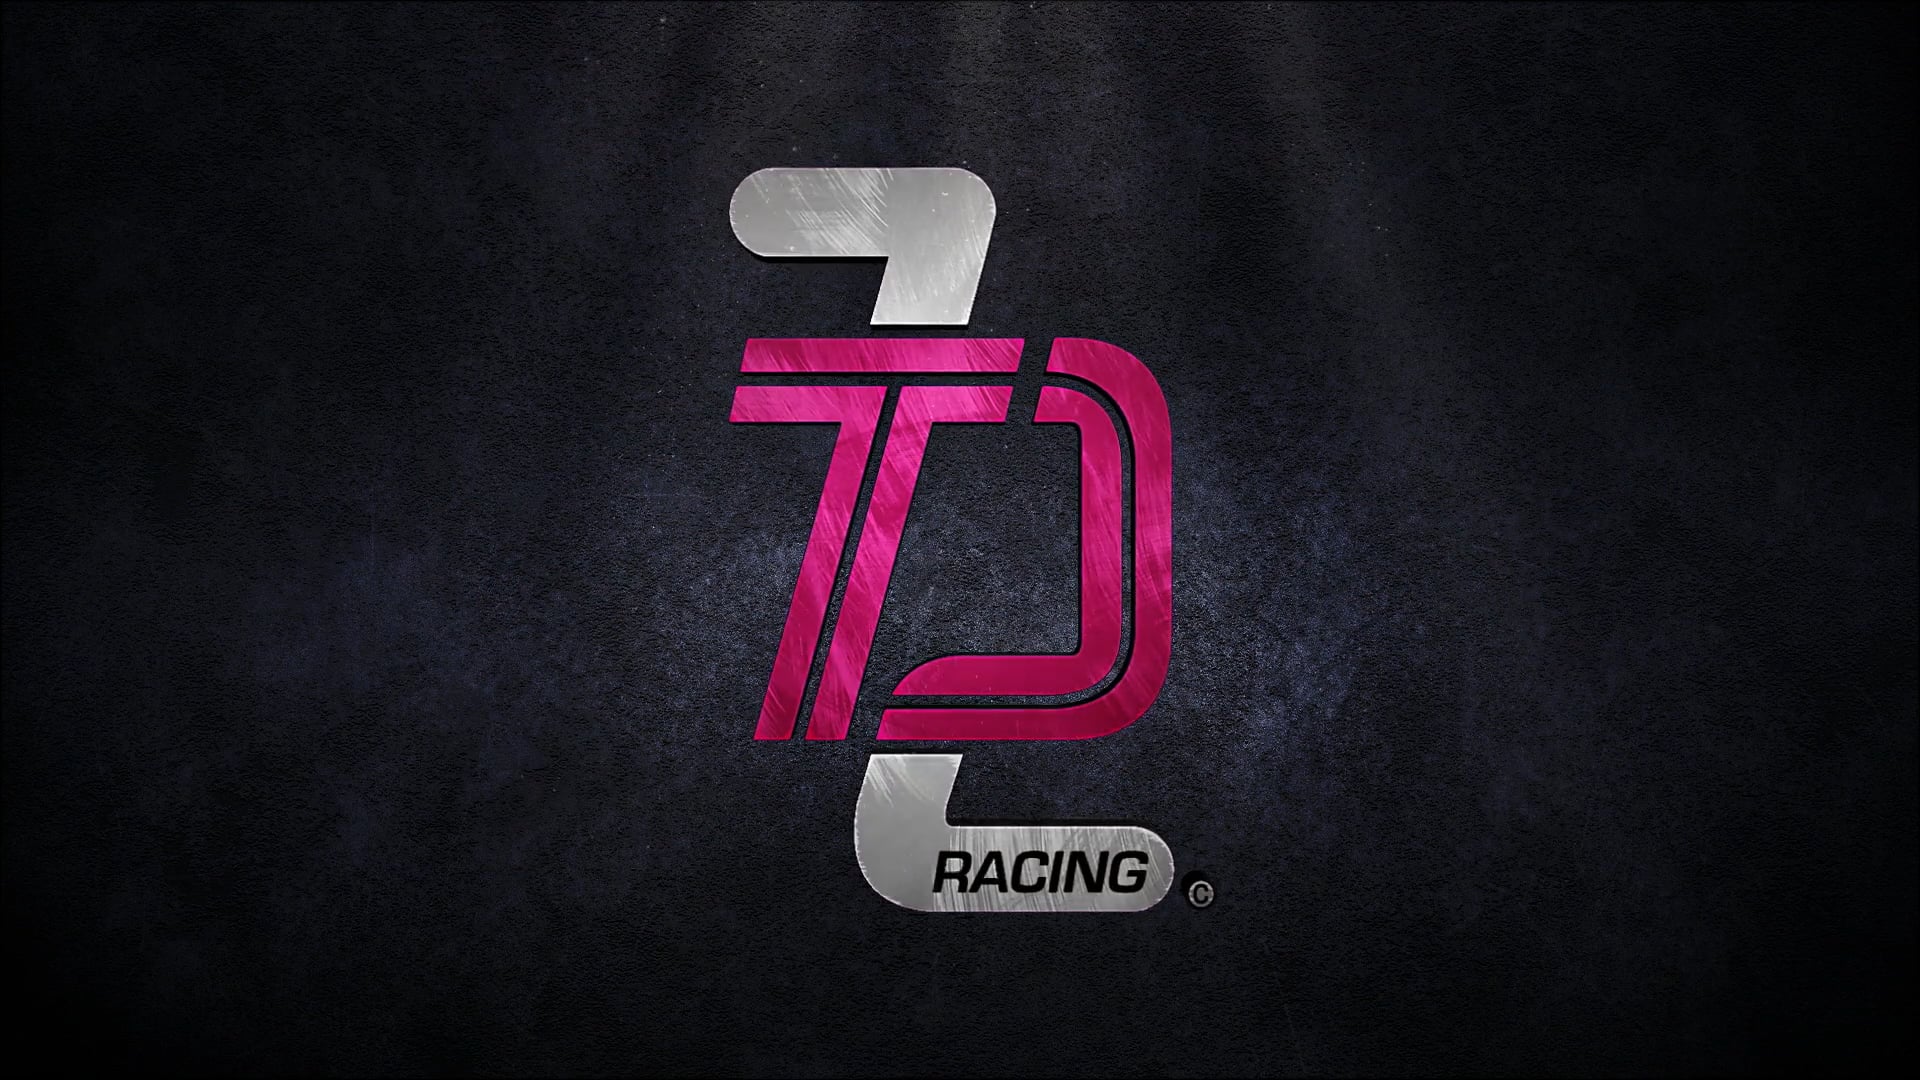 TD RACING 72